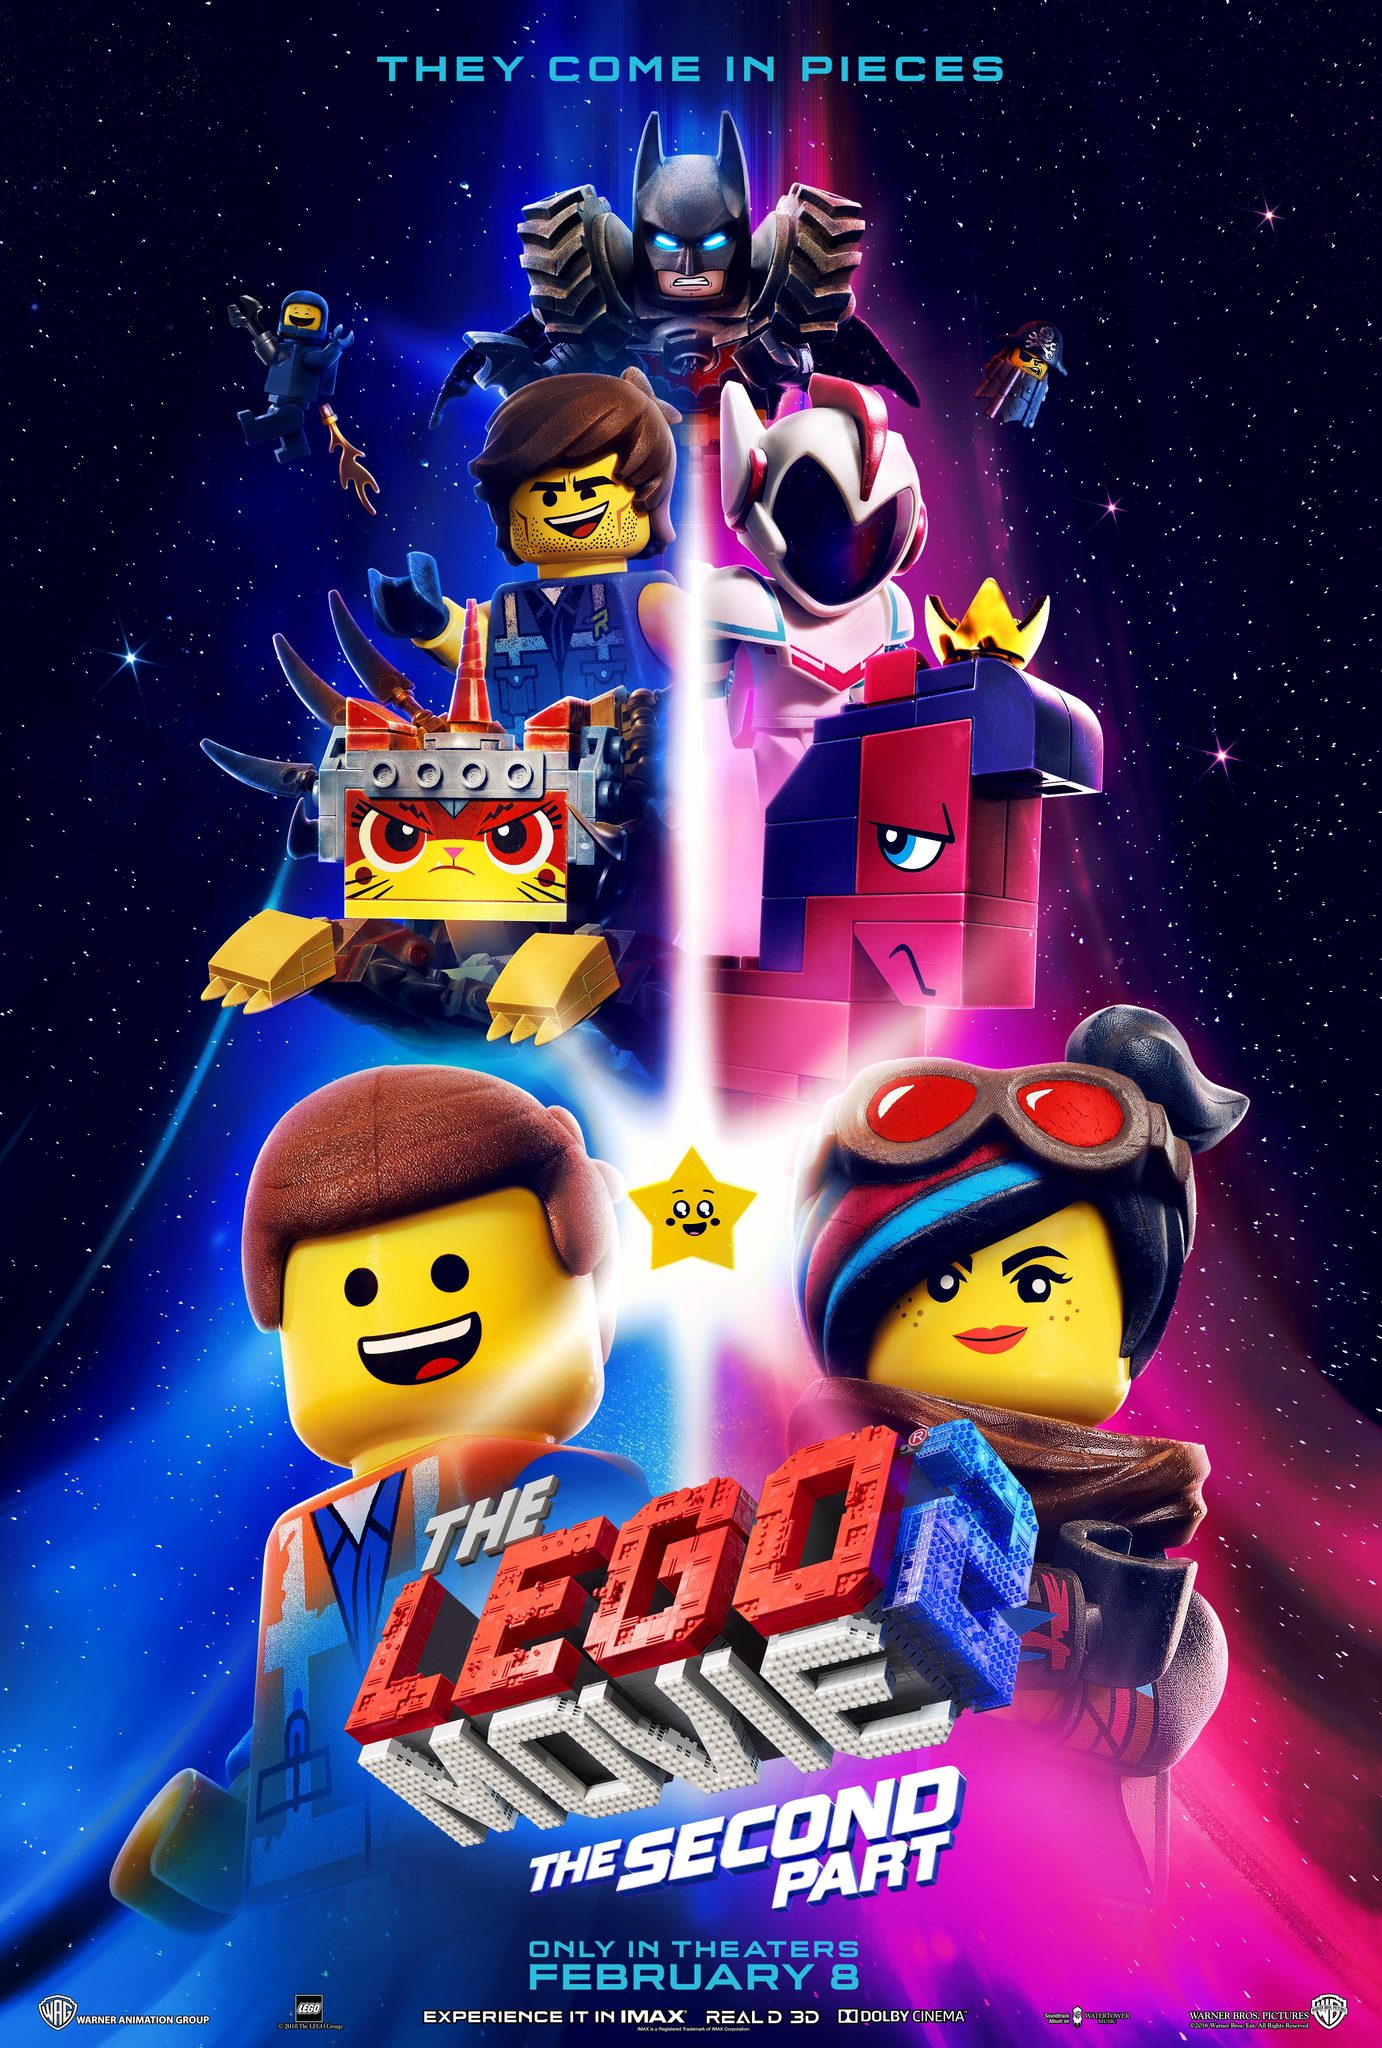 Stiahni si Filmy Kreslené LEGO pribeh 2 / The Lego Movie 2: The Second Part (2019)(CZ/SK/EN) = CSFD 69%